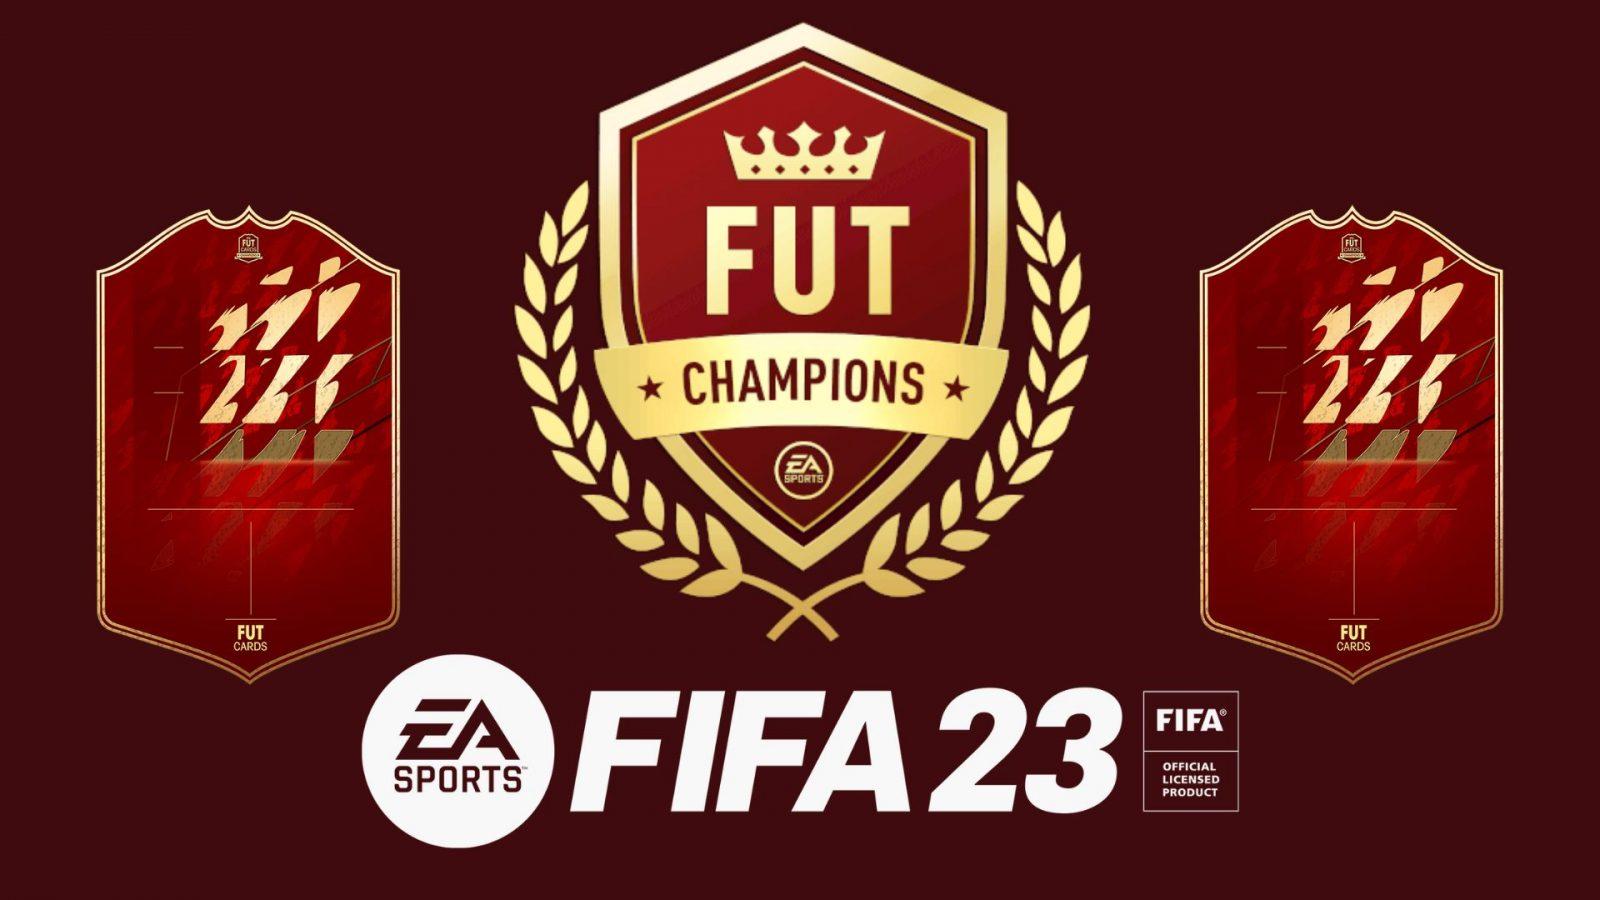 fut champions fifa 23 logo